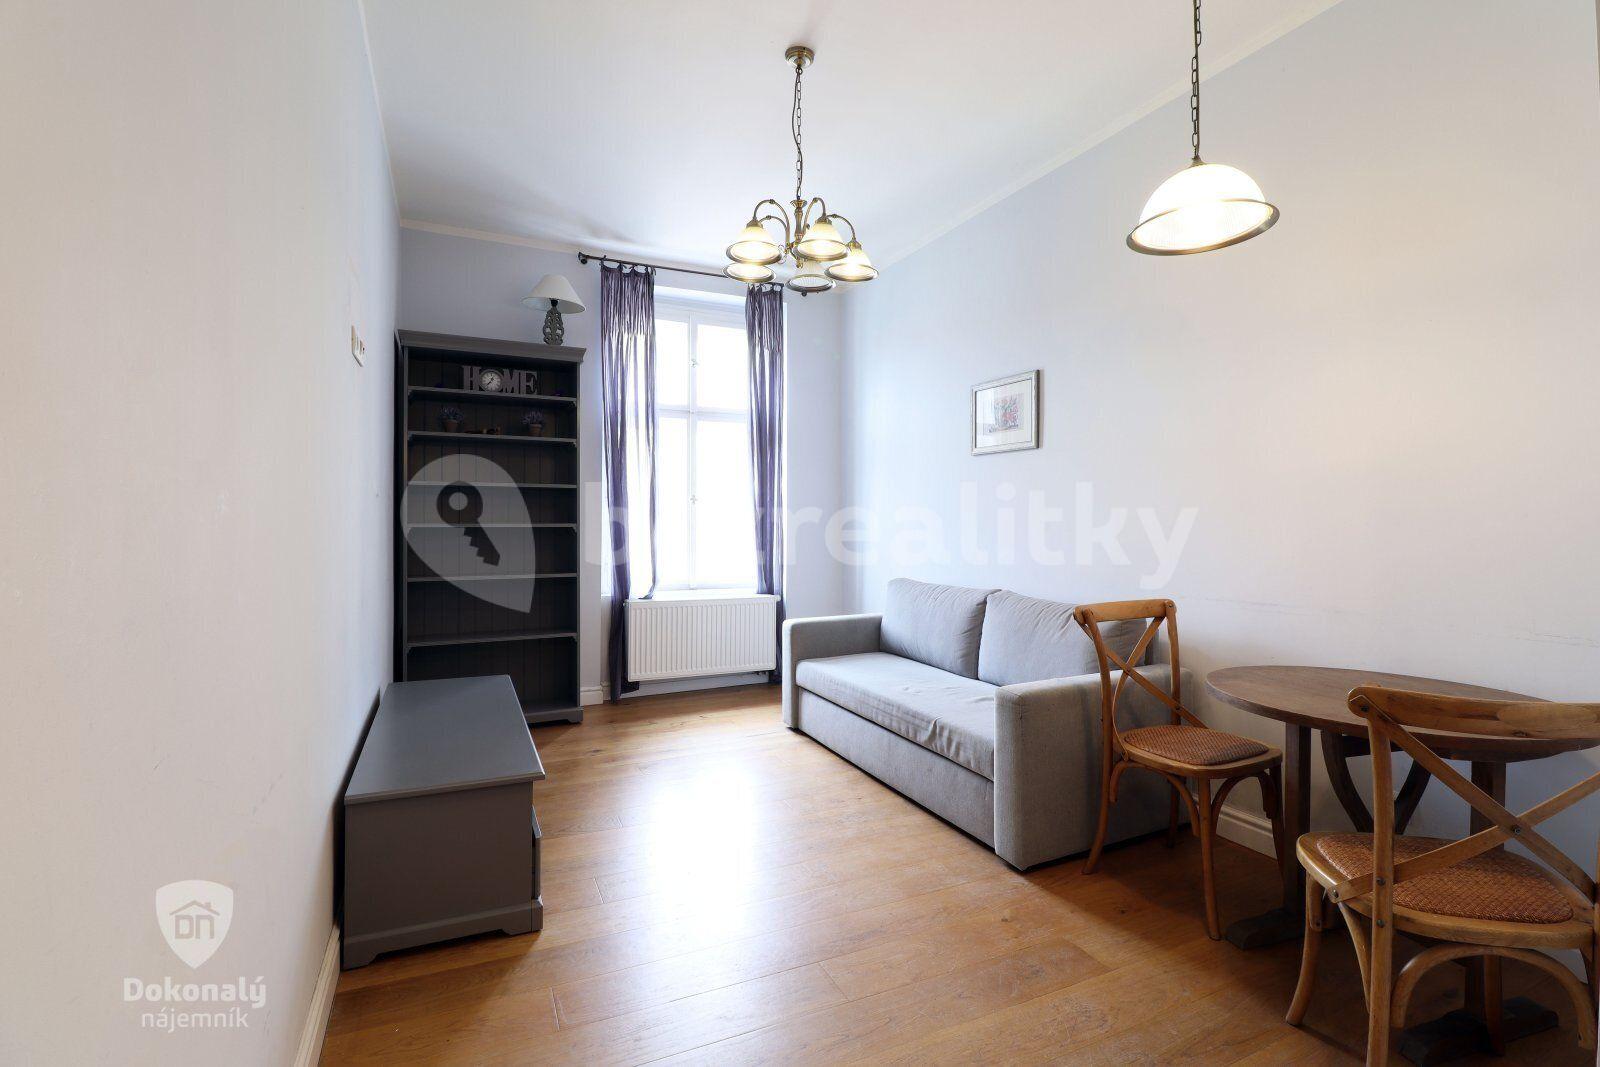 1 bedroom with open-plan kitchen flat to rent, 42 m², Kroftova, Prague, Prague